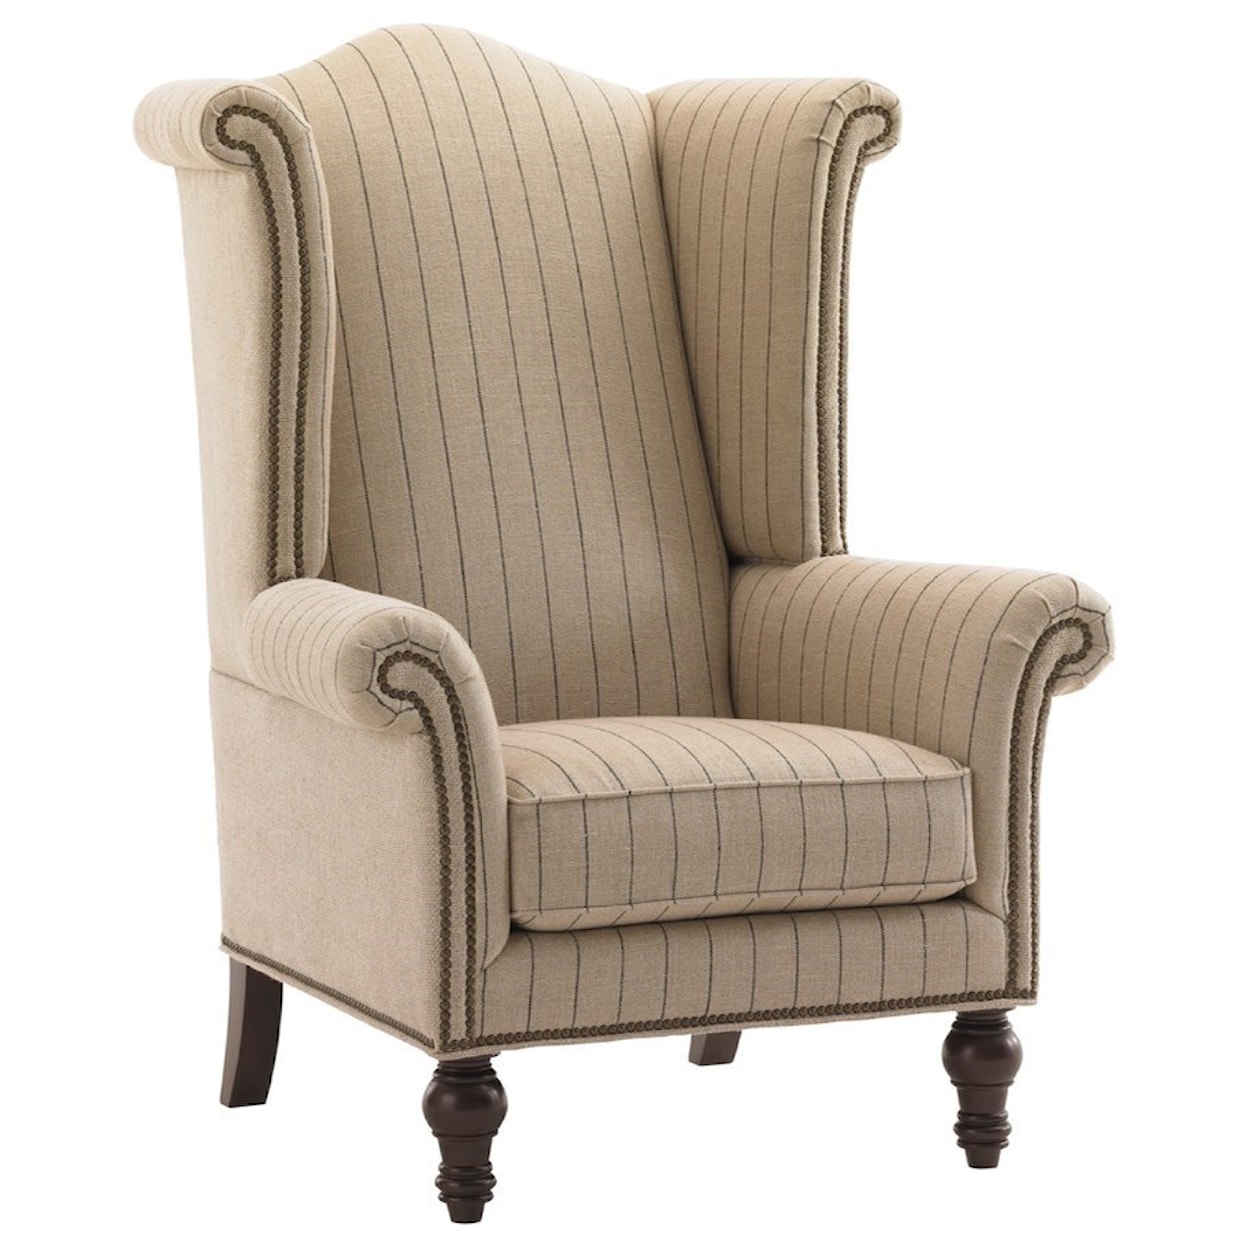 Lexington Upholstery Customizable Kings Row Wing Chair